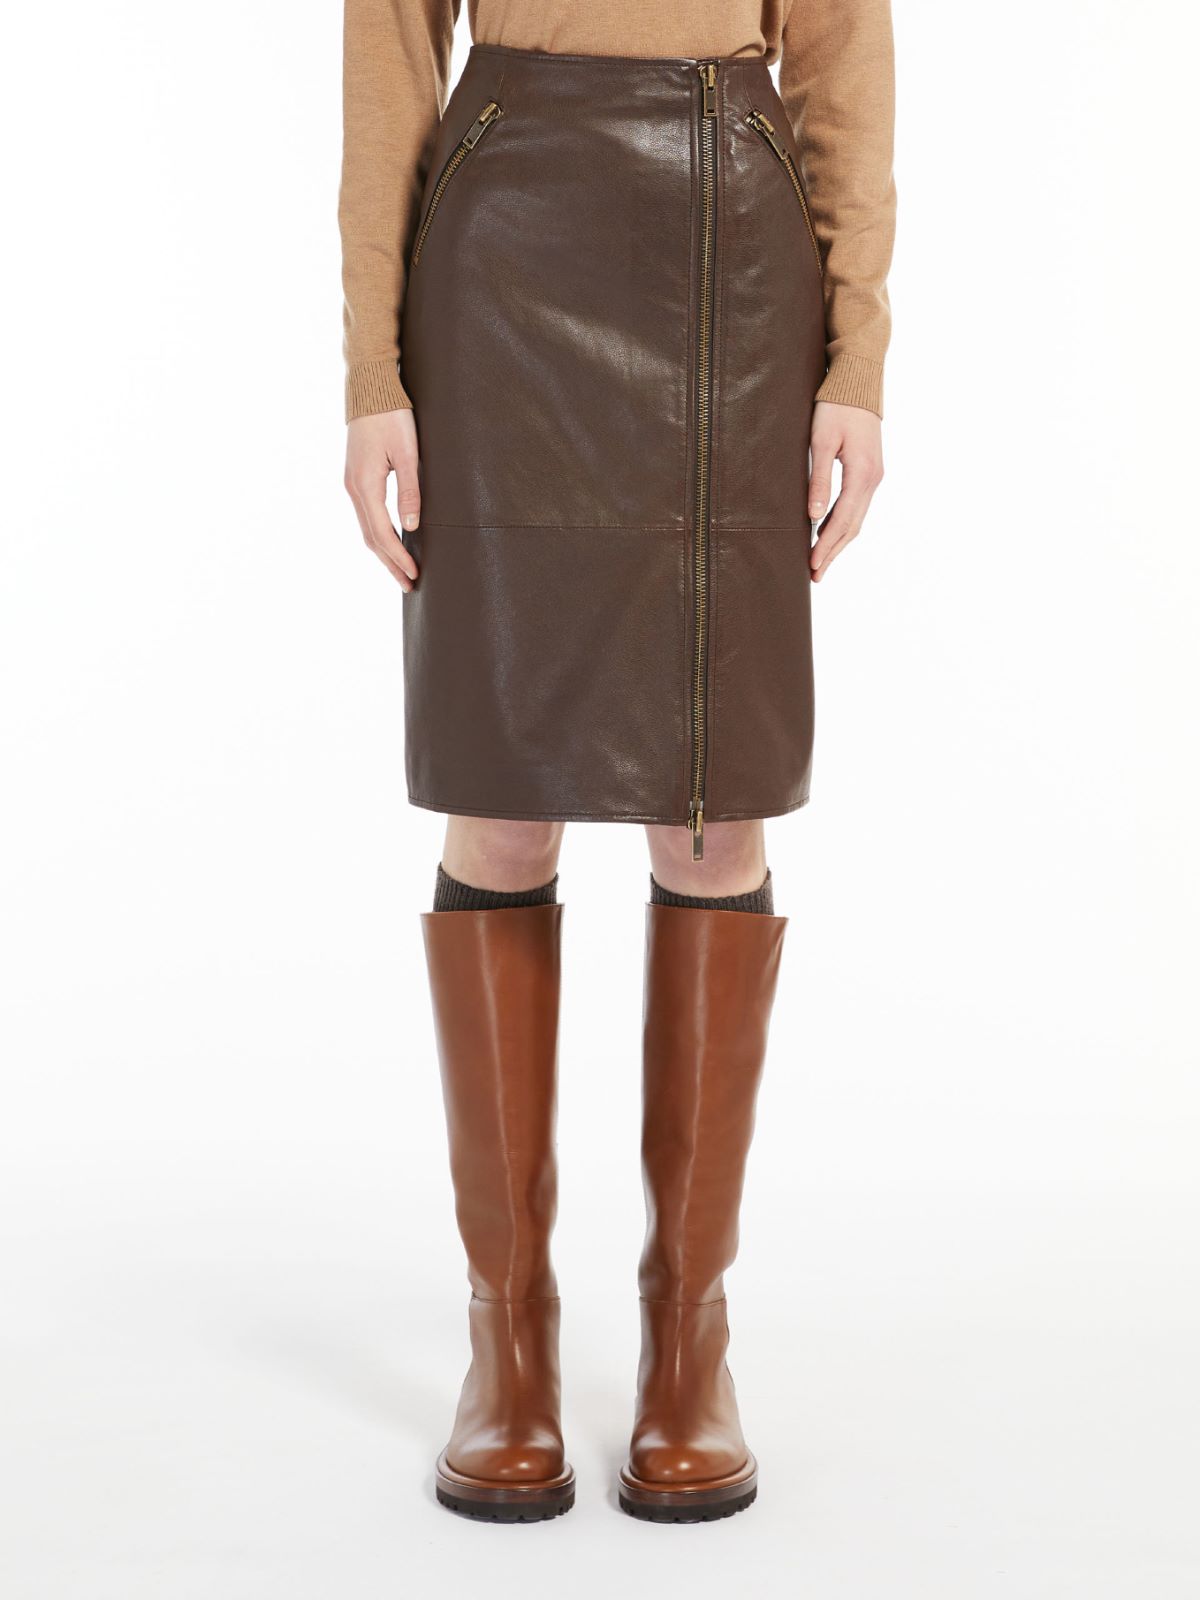 Nappa leather skirt - BROWN - Weekend Max Mara - 2